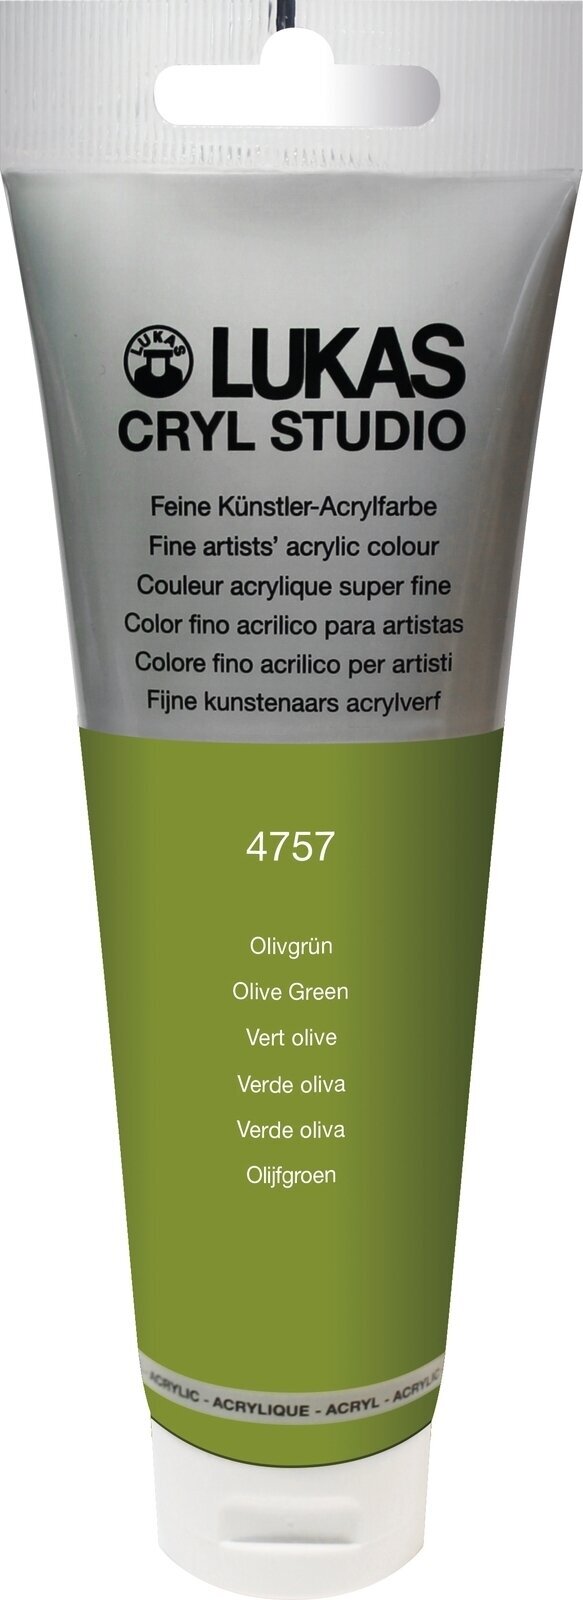 Akrylová farba Lukas Cryl Studio Acrylic Paint Plastic Tube Akrylová farba Olive Green 125 ml 1 ks